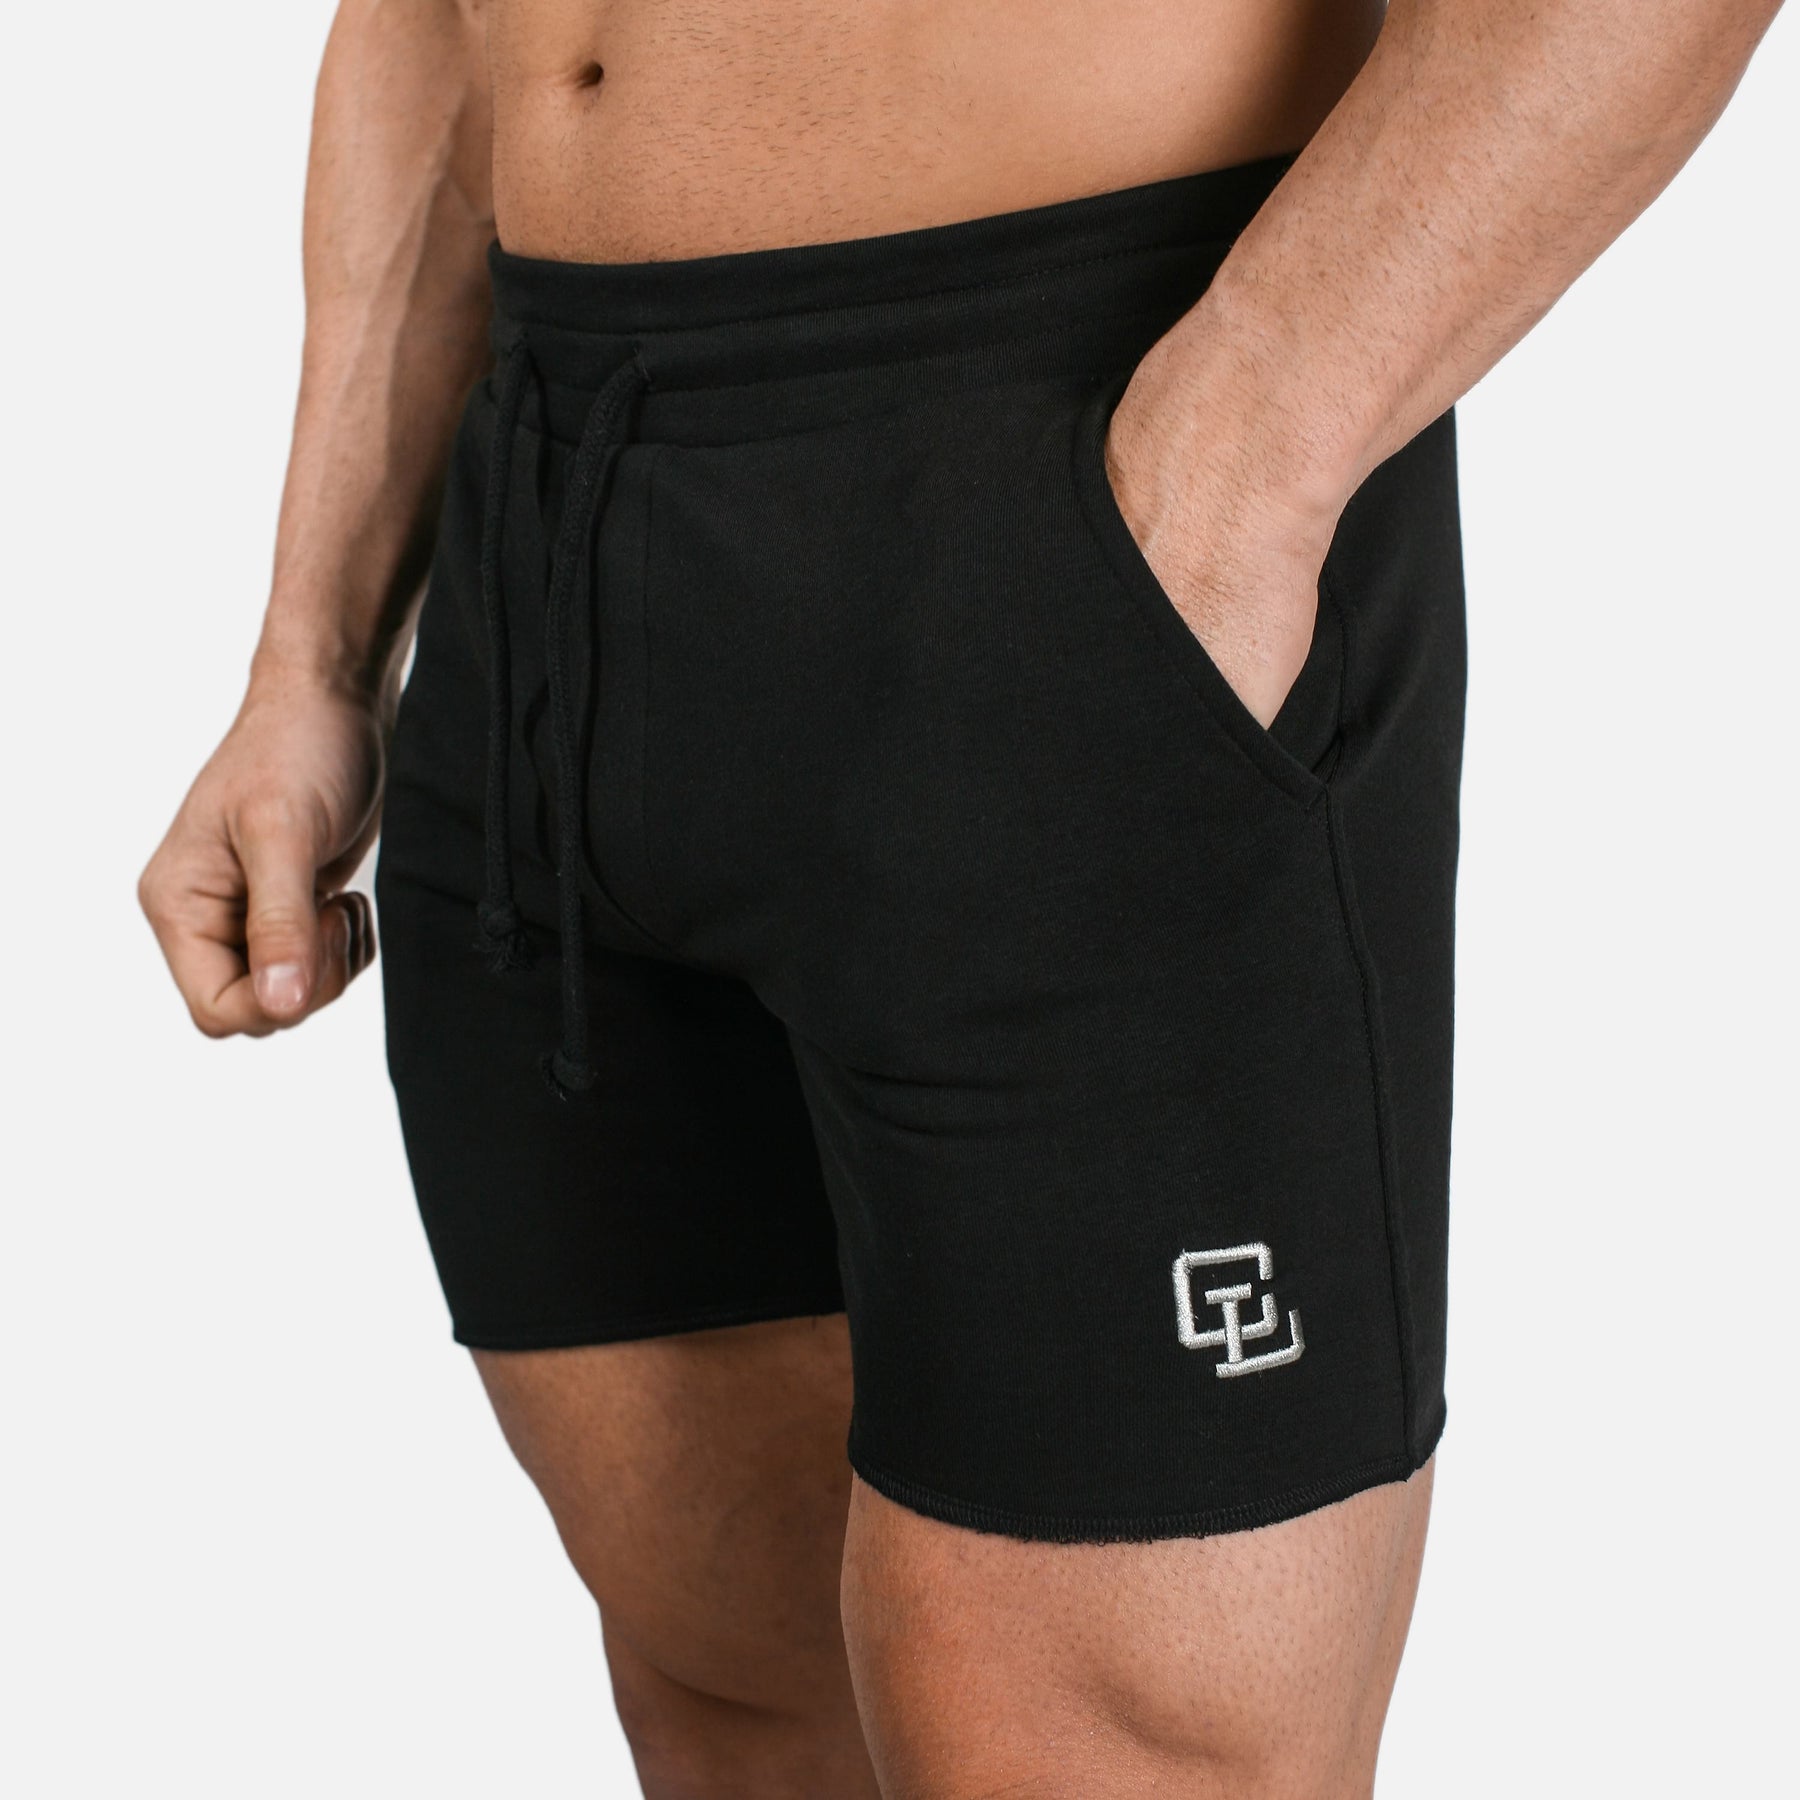 Buy Leg Day Shorts Online – Clifford Lenox